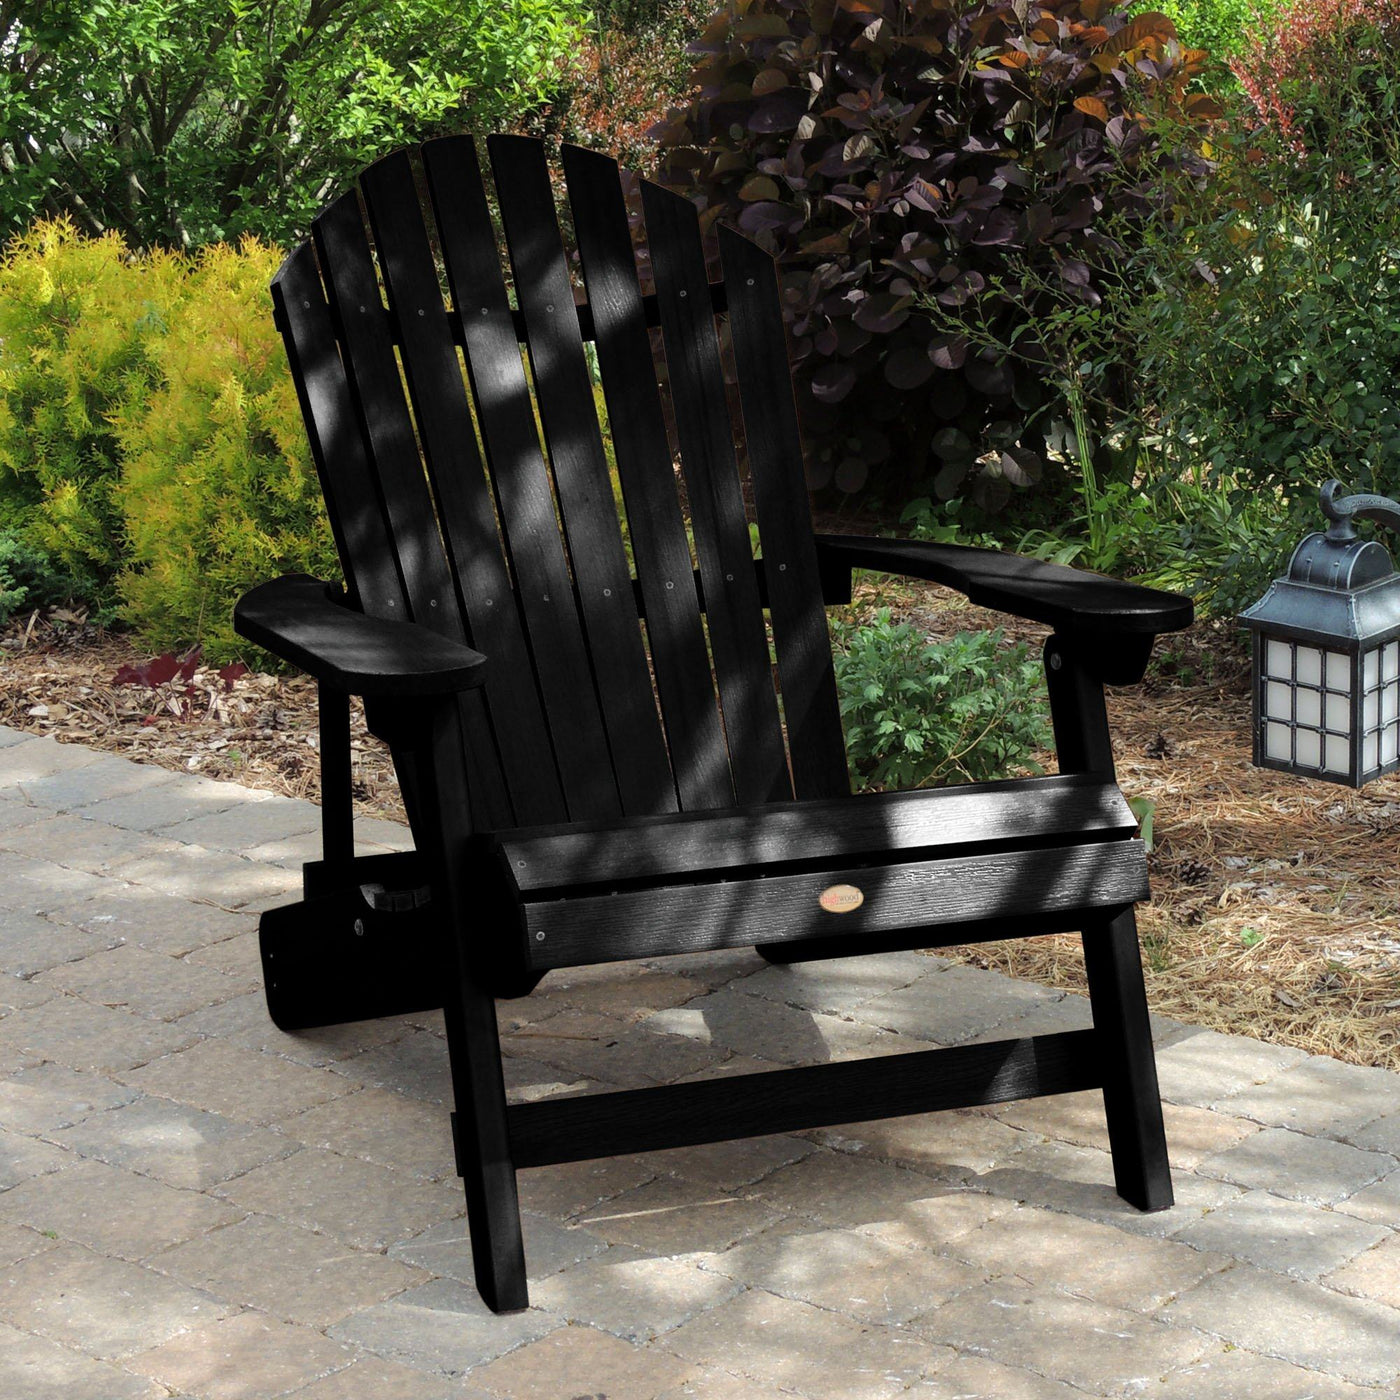 Refurbished King Hamilton Folding & Reclining Adirondack Chair Highwood USA 